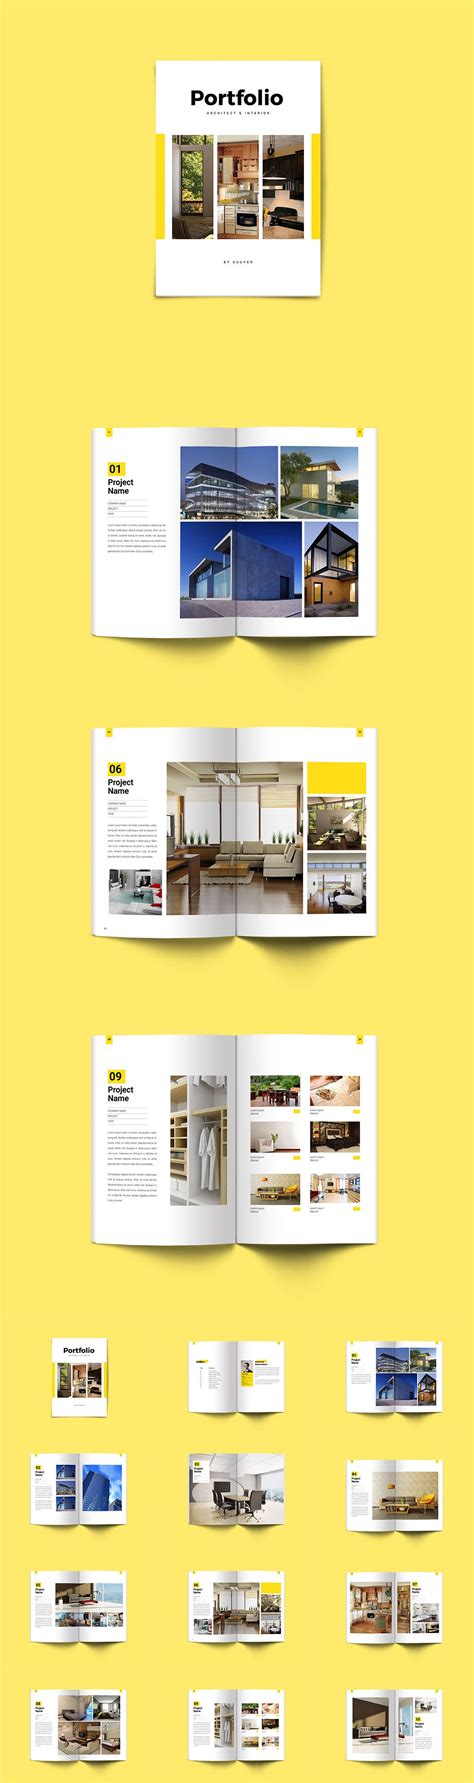 25 Elegant Interior Design Portfolio Layout Templates Home Decor News